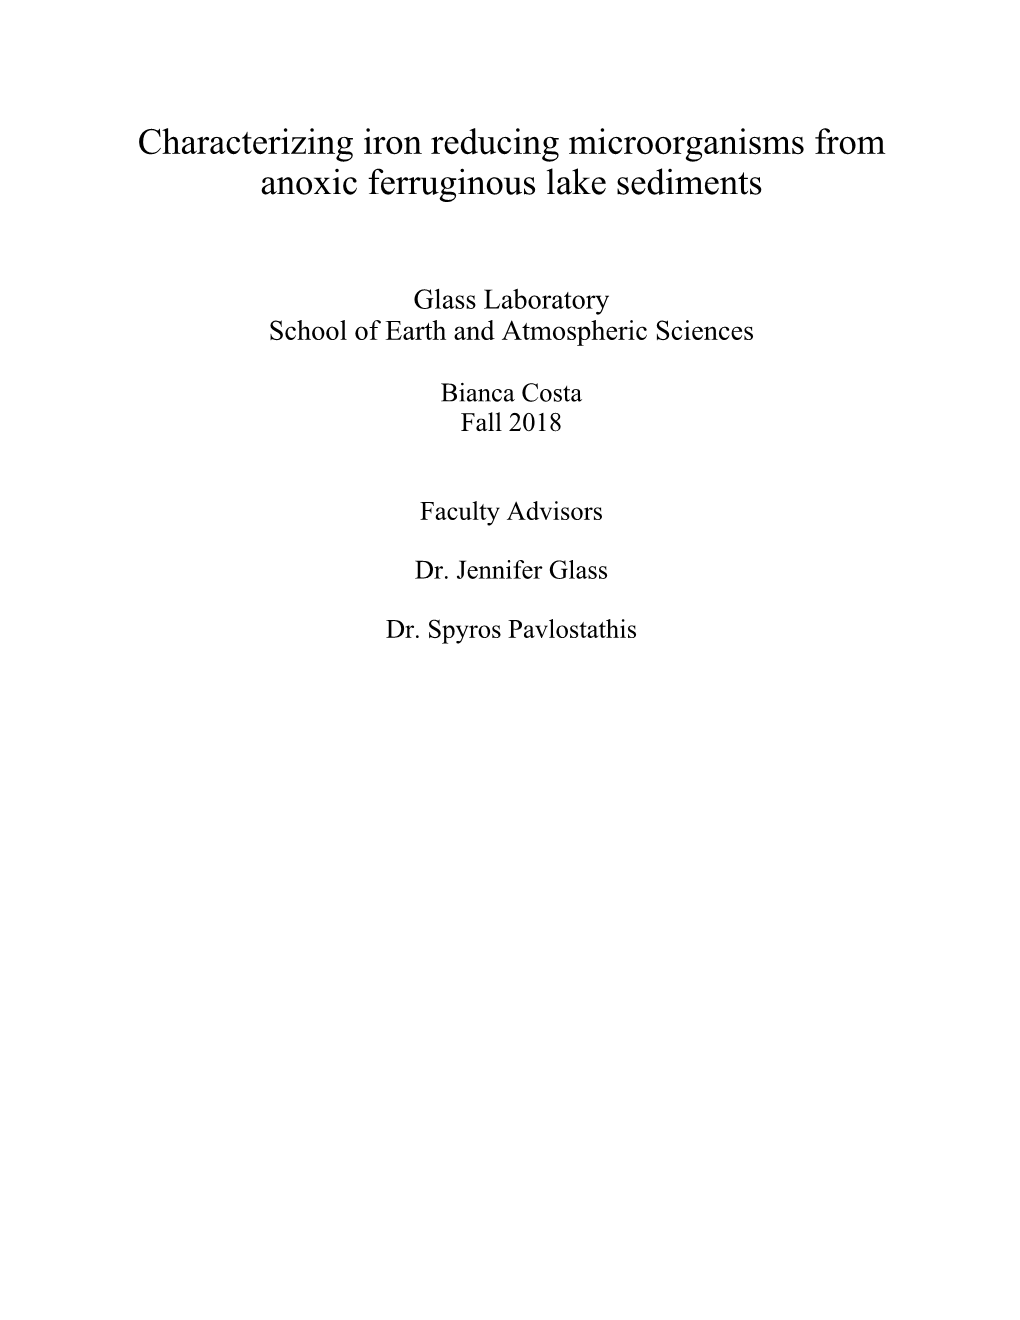 Characterizing Iron Reducing Microorganisms from Anoxic Ferruginous Lake Sediments